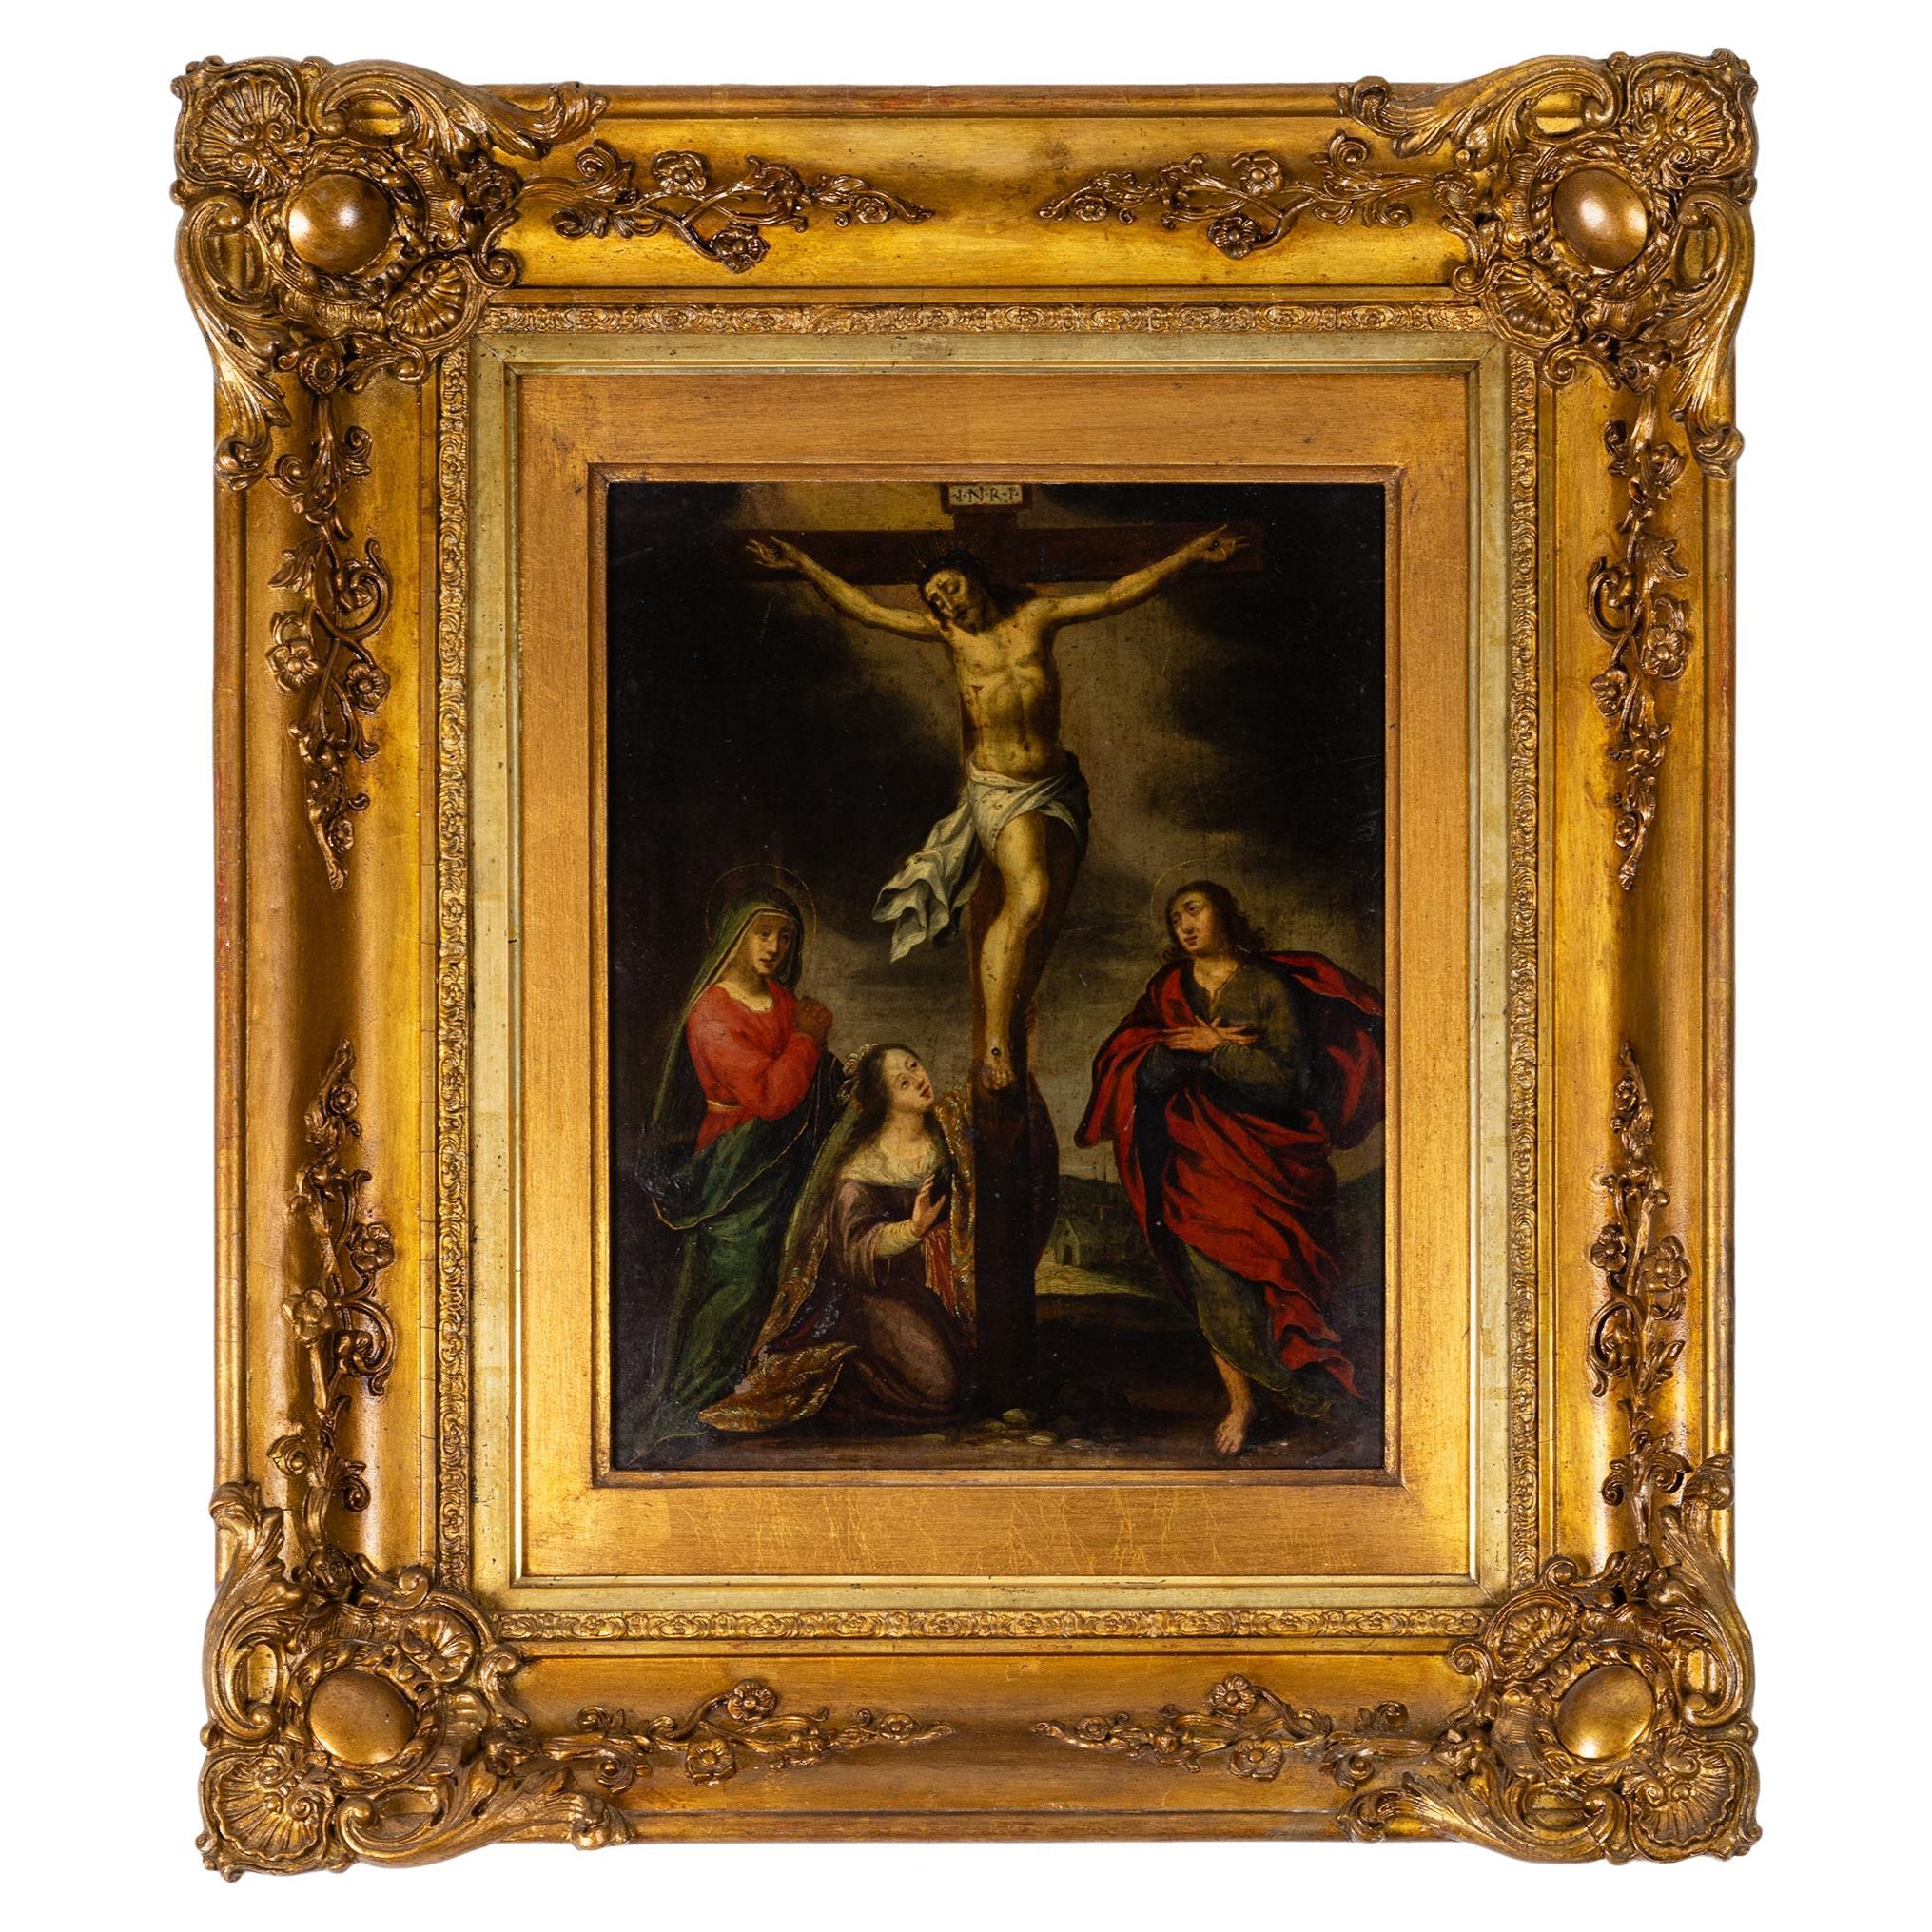 Barockes Gemälde der Kreuzigung Christi, 17. Jahrhundert – religiöse Kunst im Angebot